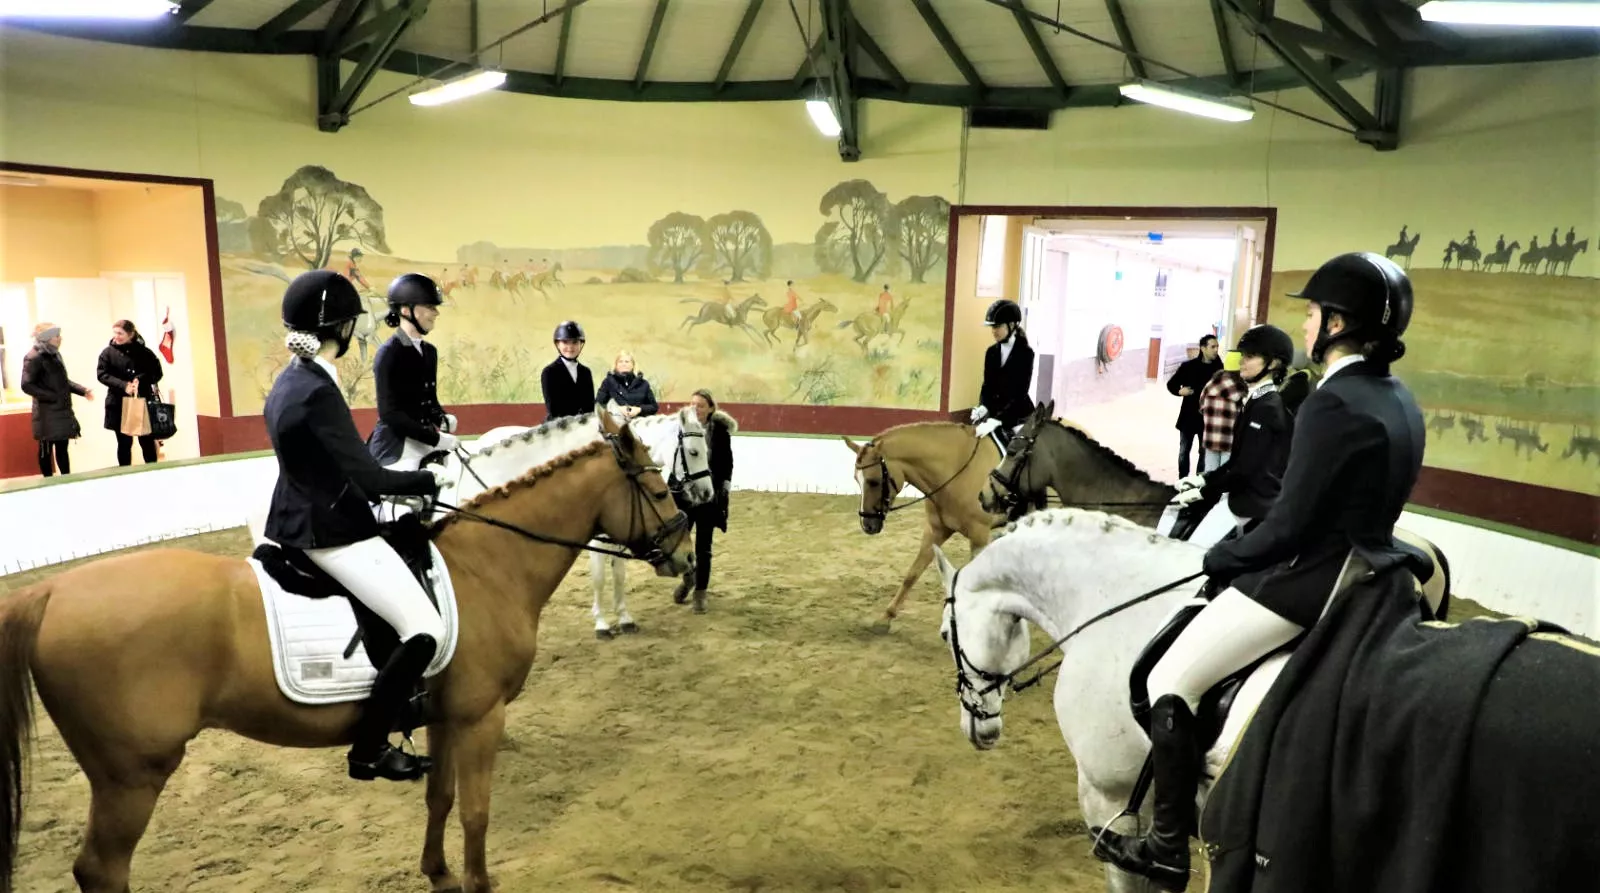 Gentofte Rideklub in Denmark, Europe | Horseback Riding - Rated 0.8